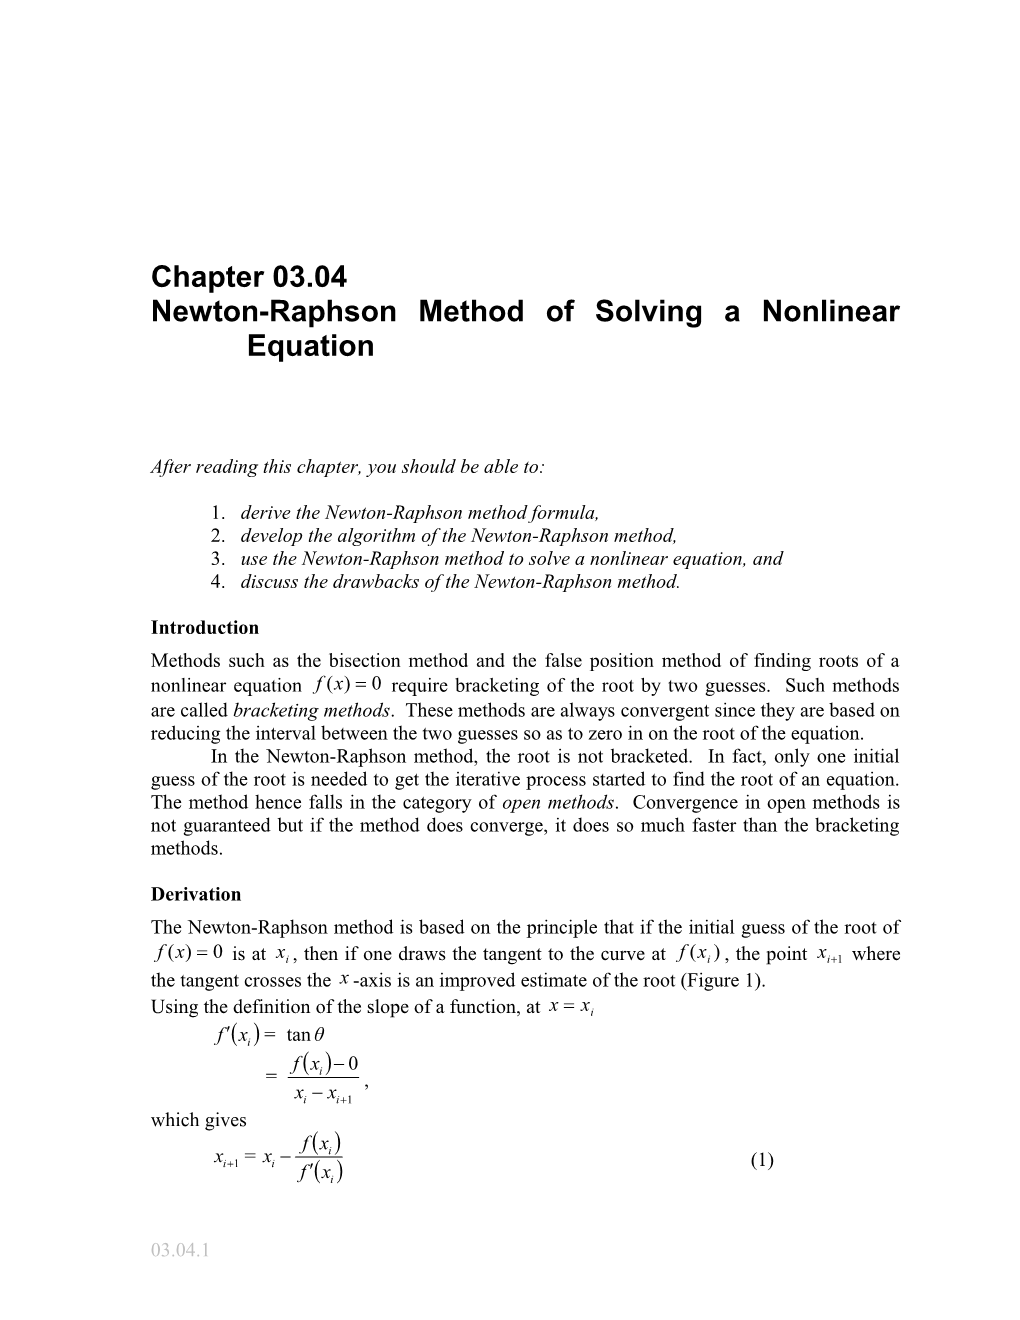 Newton-Raphson Mehtod of Solving Nonlinear Equations: General Engineering